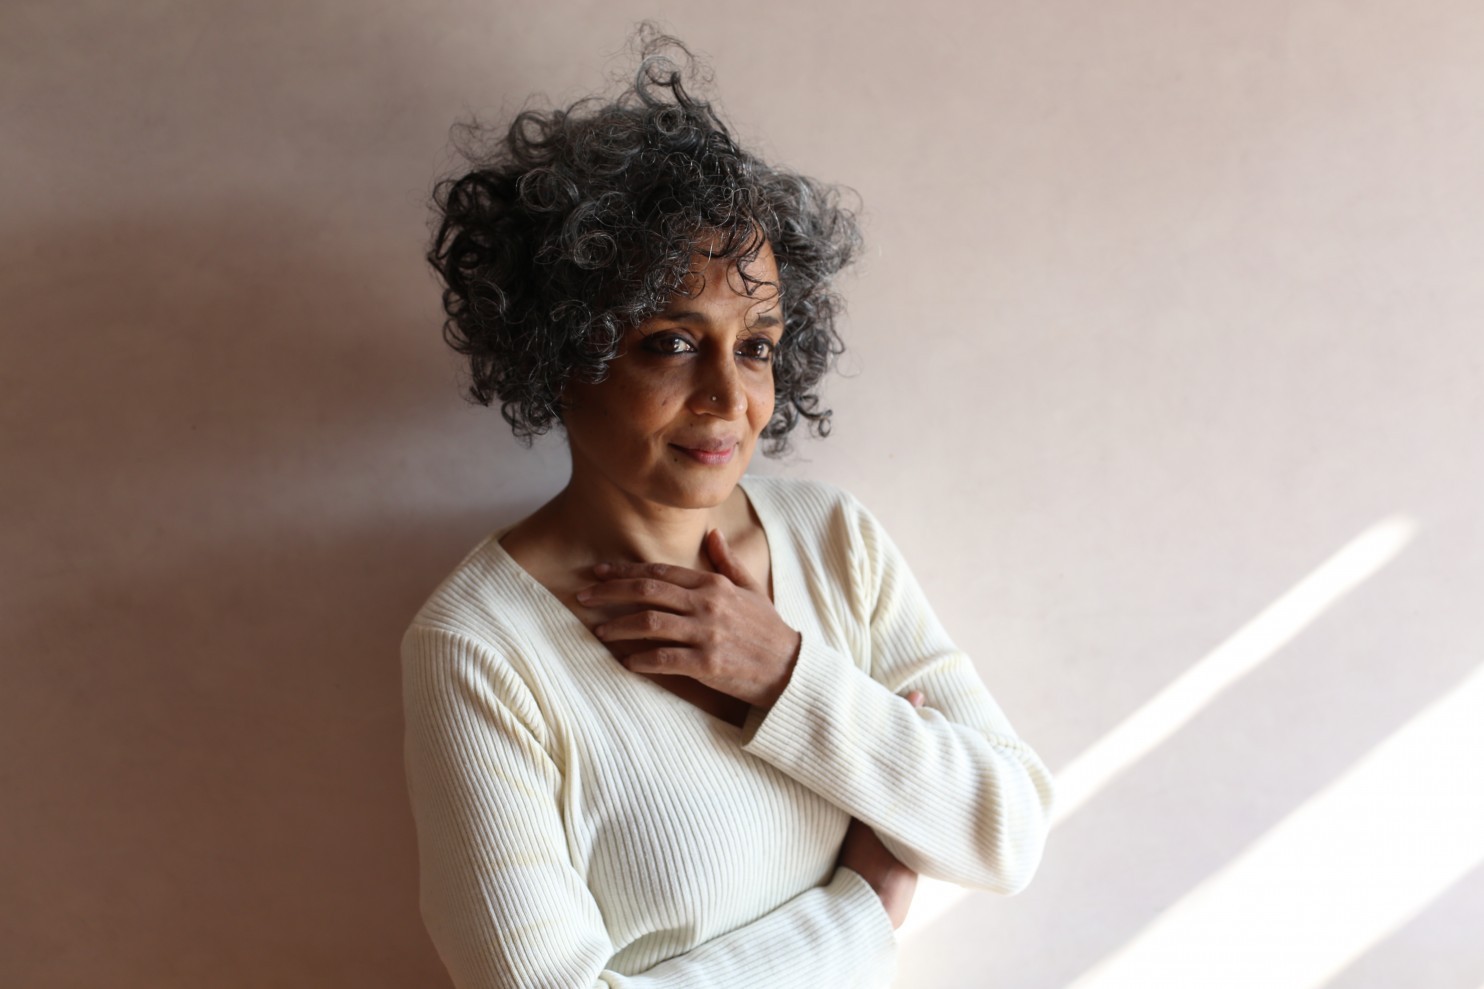 Indian writer and activist Arundhati Roy. Photo: Mayank Austen Soofi